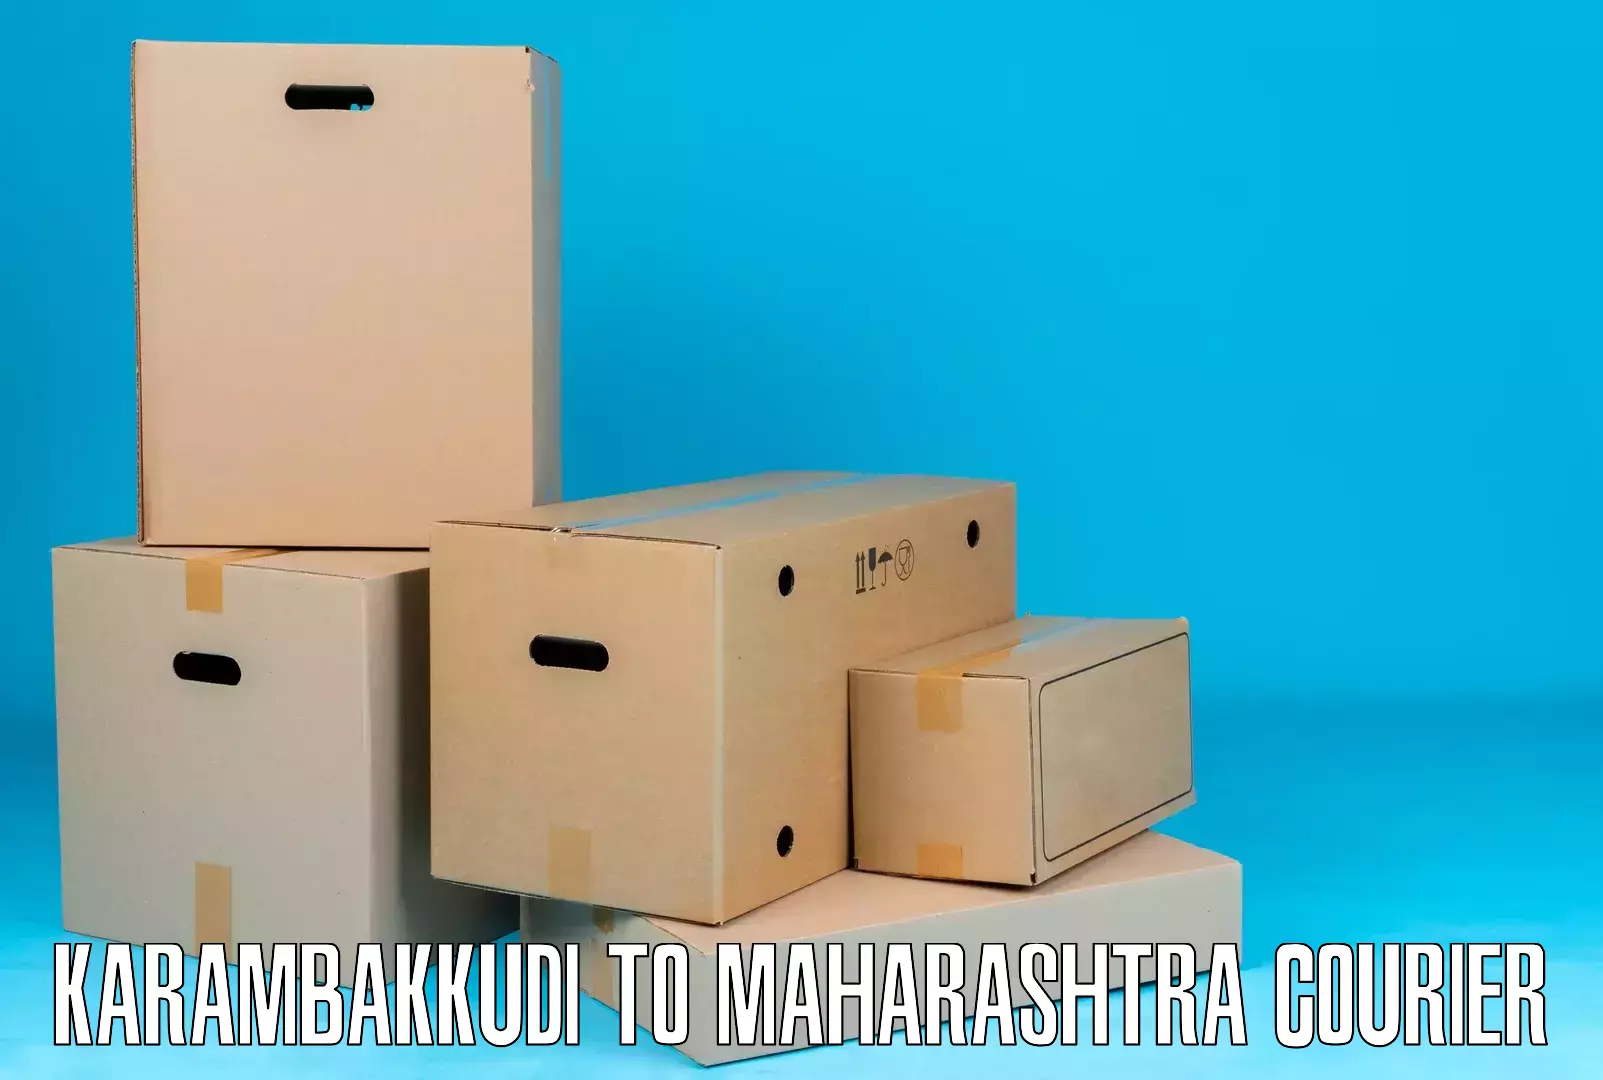 Courier service comparison Karambakkudi to Maharashtra